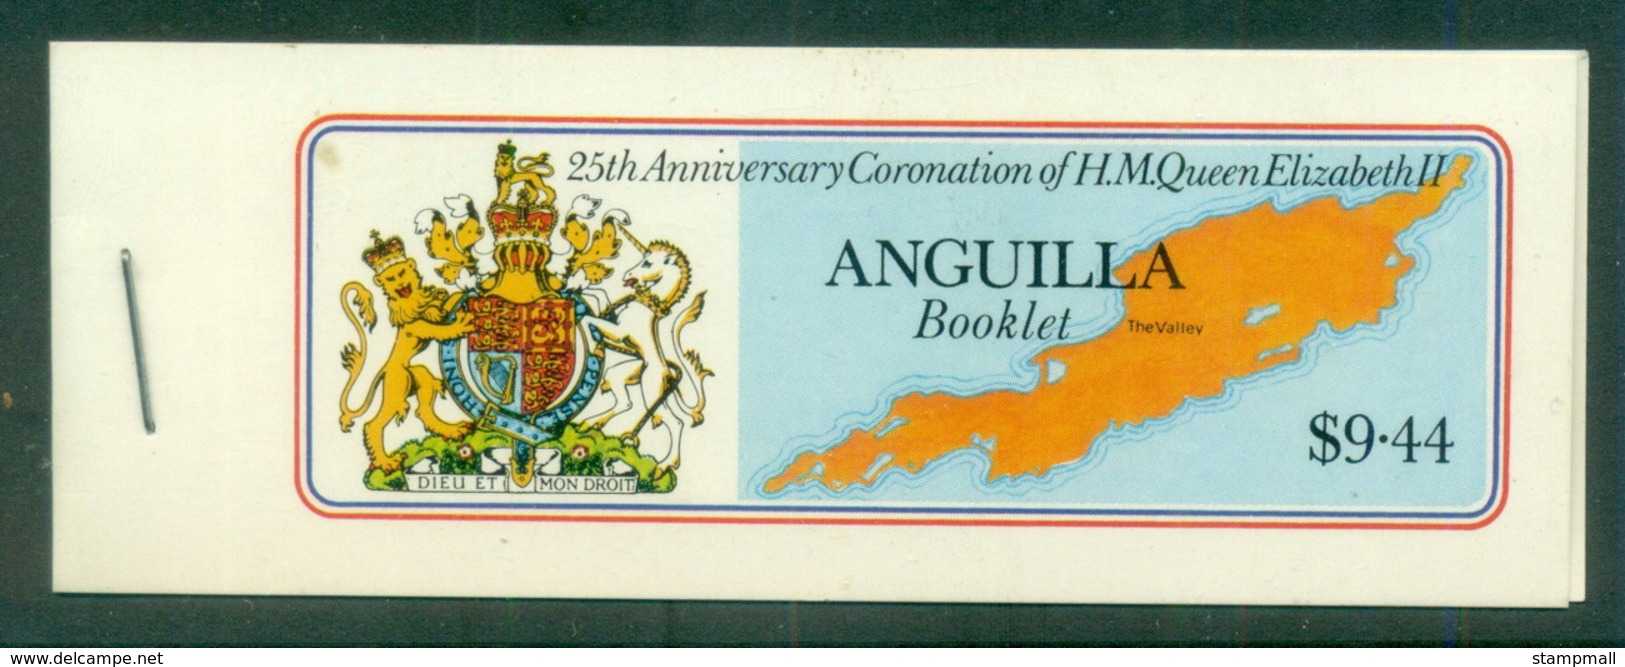 Anguilla 1978 QEII Coronation 25th Anniv., Booklet, (pane Selvage At Right) MUH - Anguilla (1968-...)